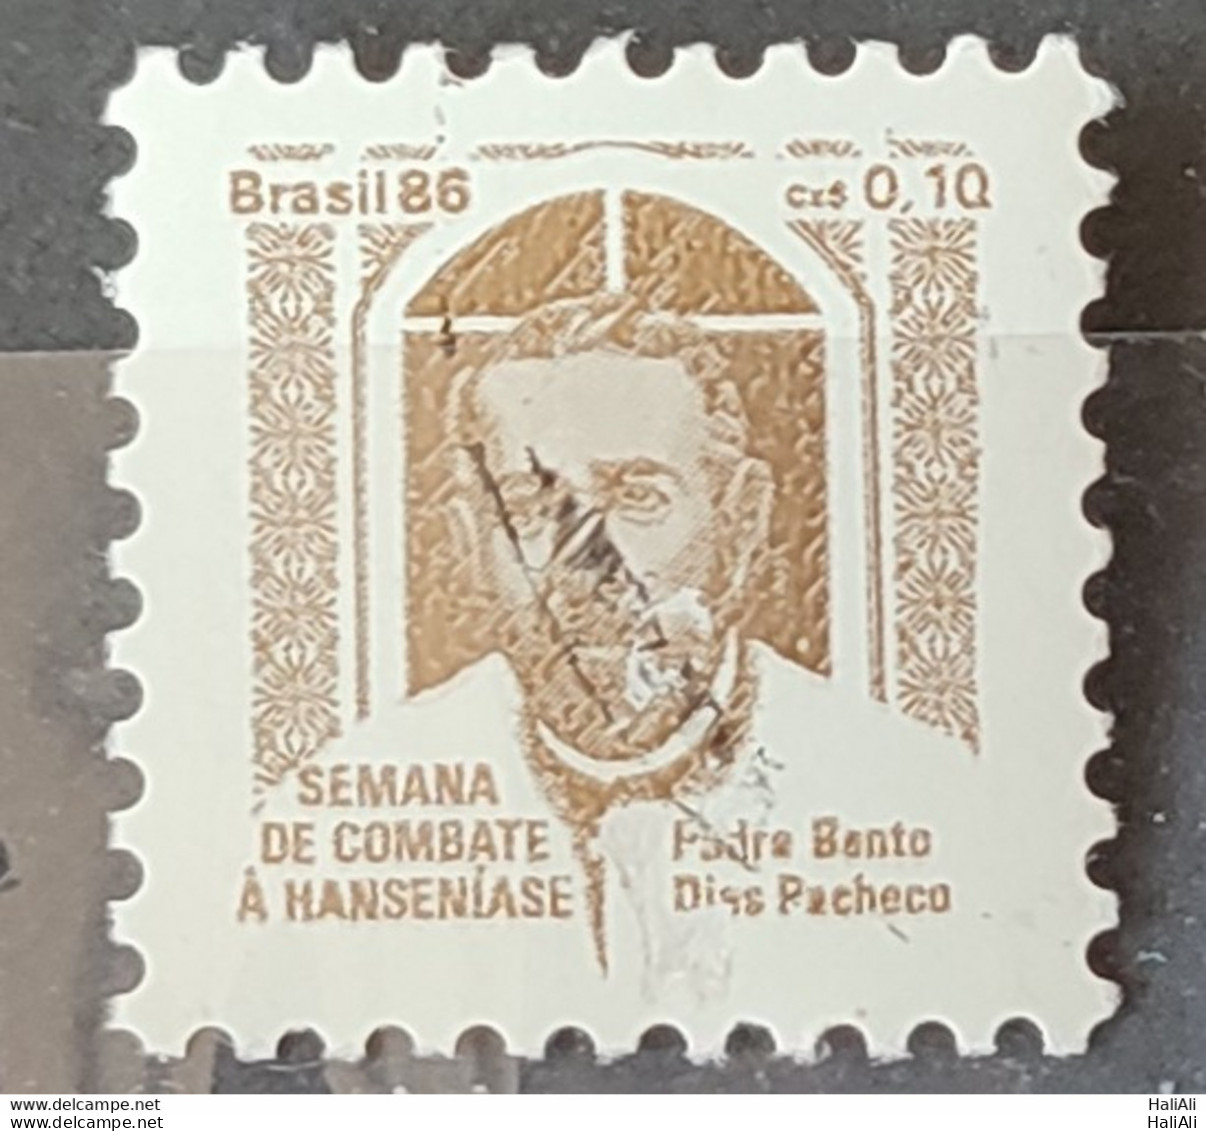 C 1538 Brazil Stamp Combat Against Hansen Hanseniasse Health Father Bento Religion 1986 H23 Circulated 1.jpg - Oblitérés